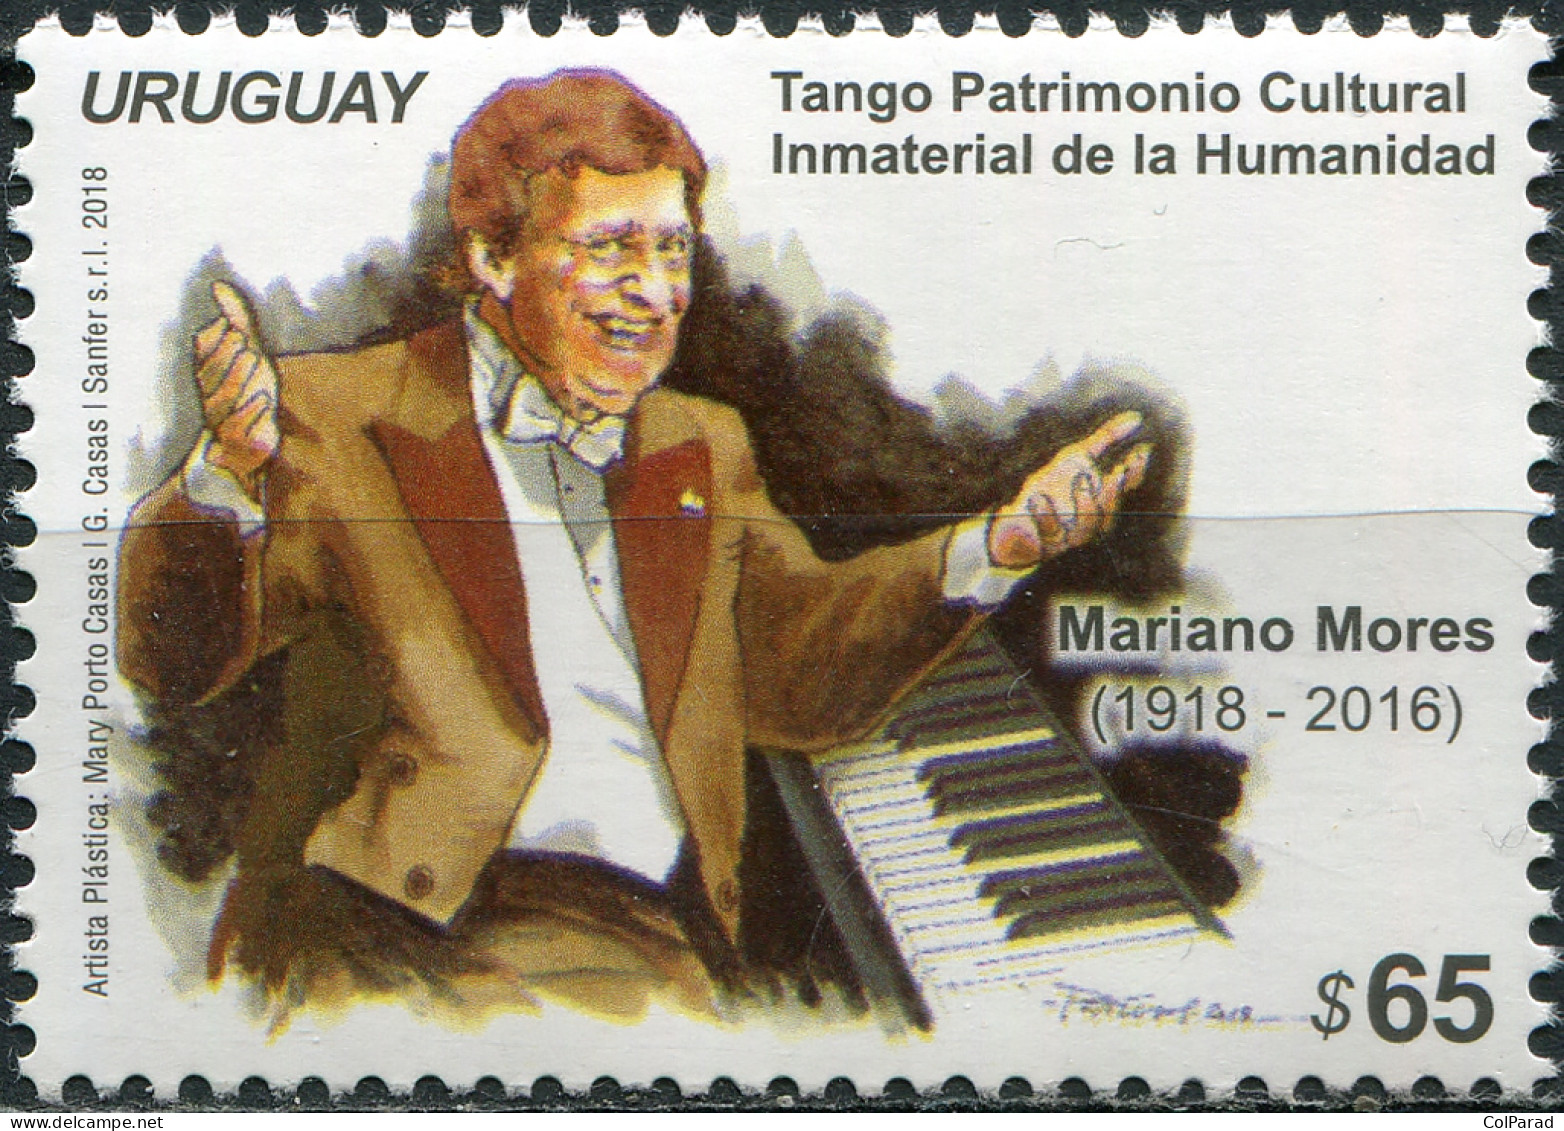 URUGUAY - 2018 - STAMP MNH ** - Mariano Mores (1918-2016), Tango Composer - Uruguay